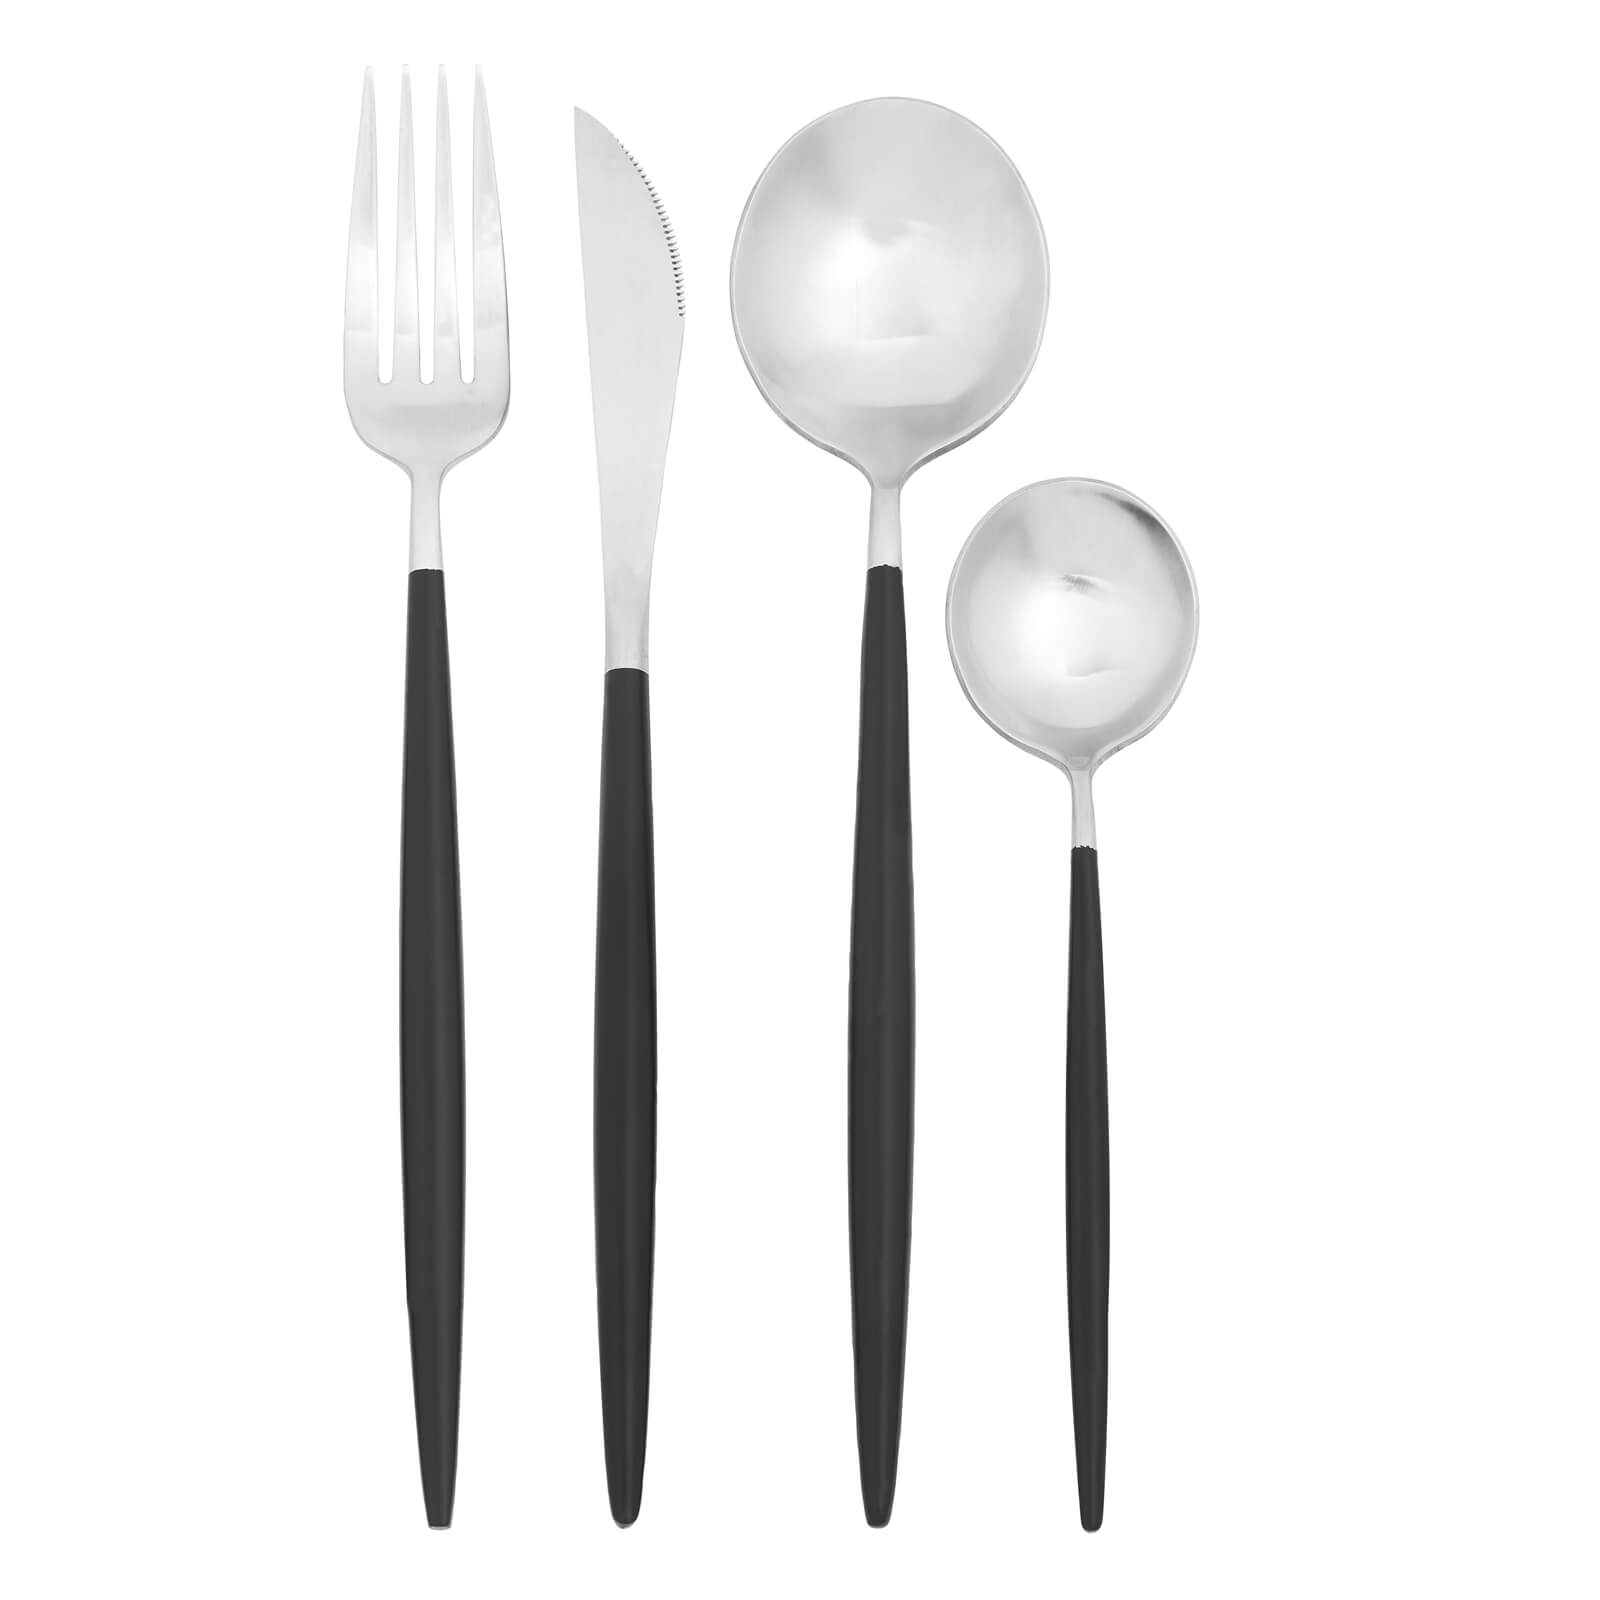 Avie Cutlery Set - Black & Silver - 16 Pieces